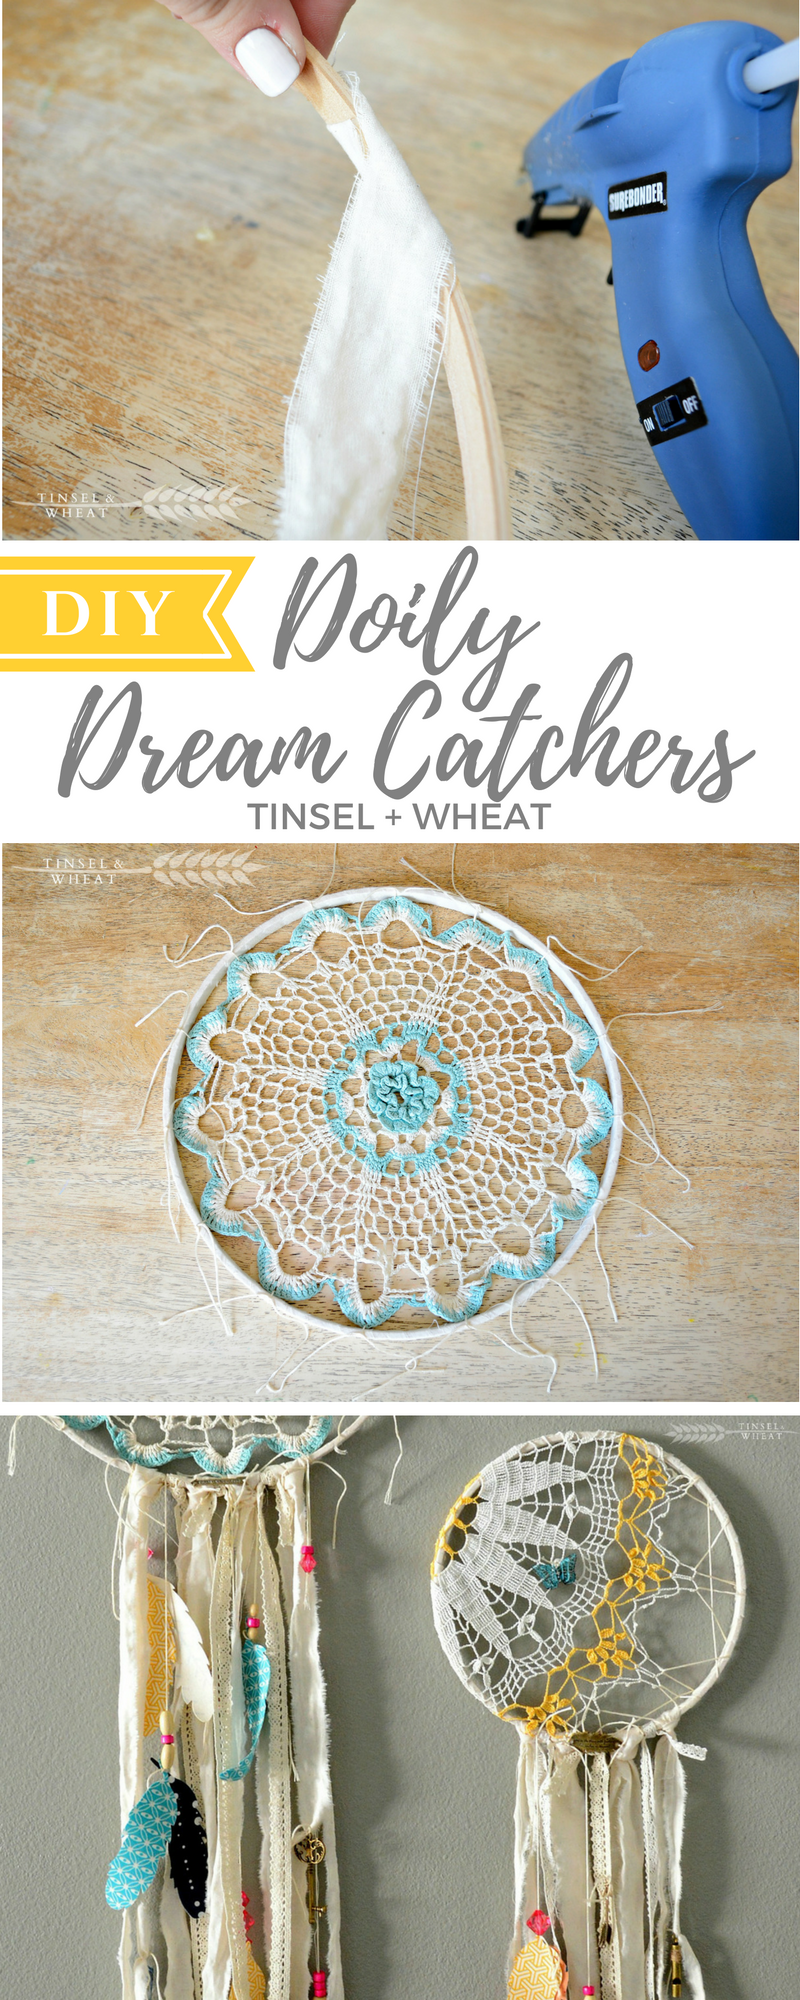 How to Make DIY Doily Dream Catchers - Tinsel + Wheat - How to Make DIY Doily Dream Catchers - Tinsel + Wheat -   19 diy Dream Catcher doily ideas